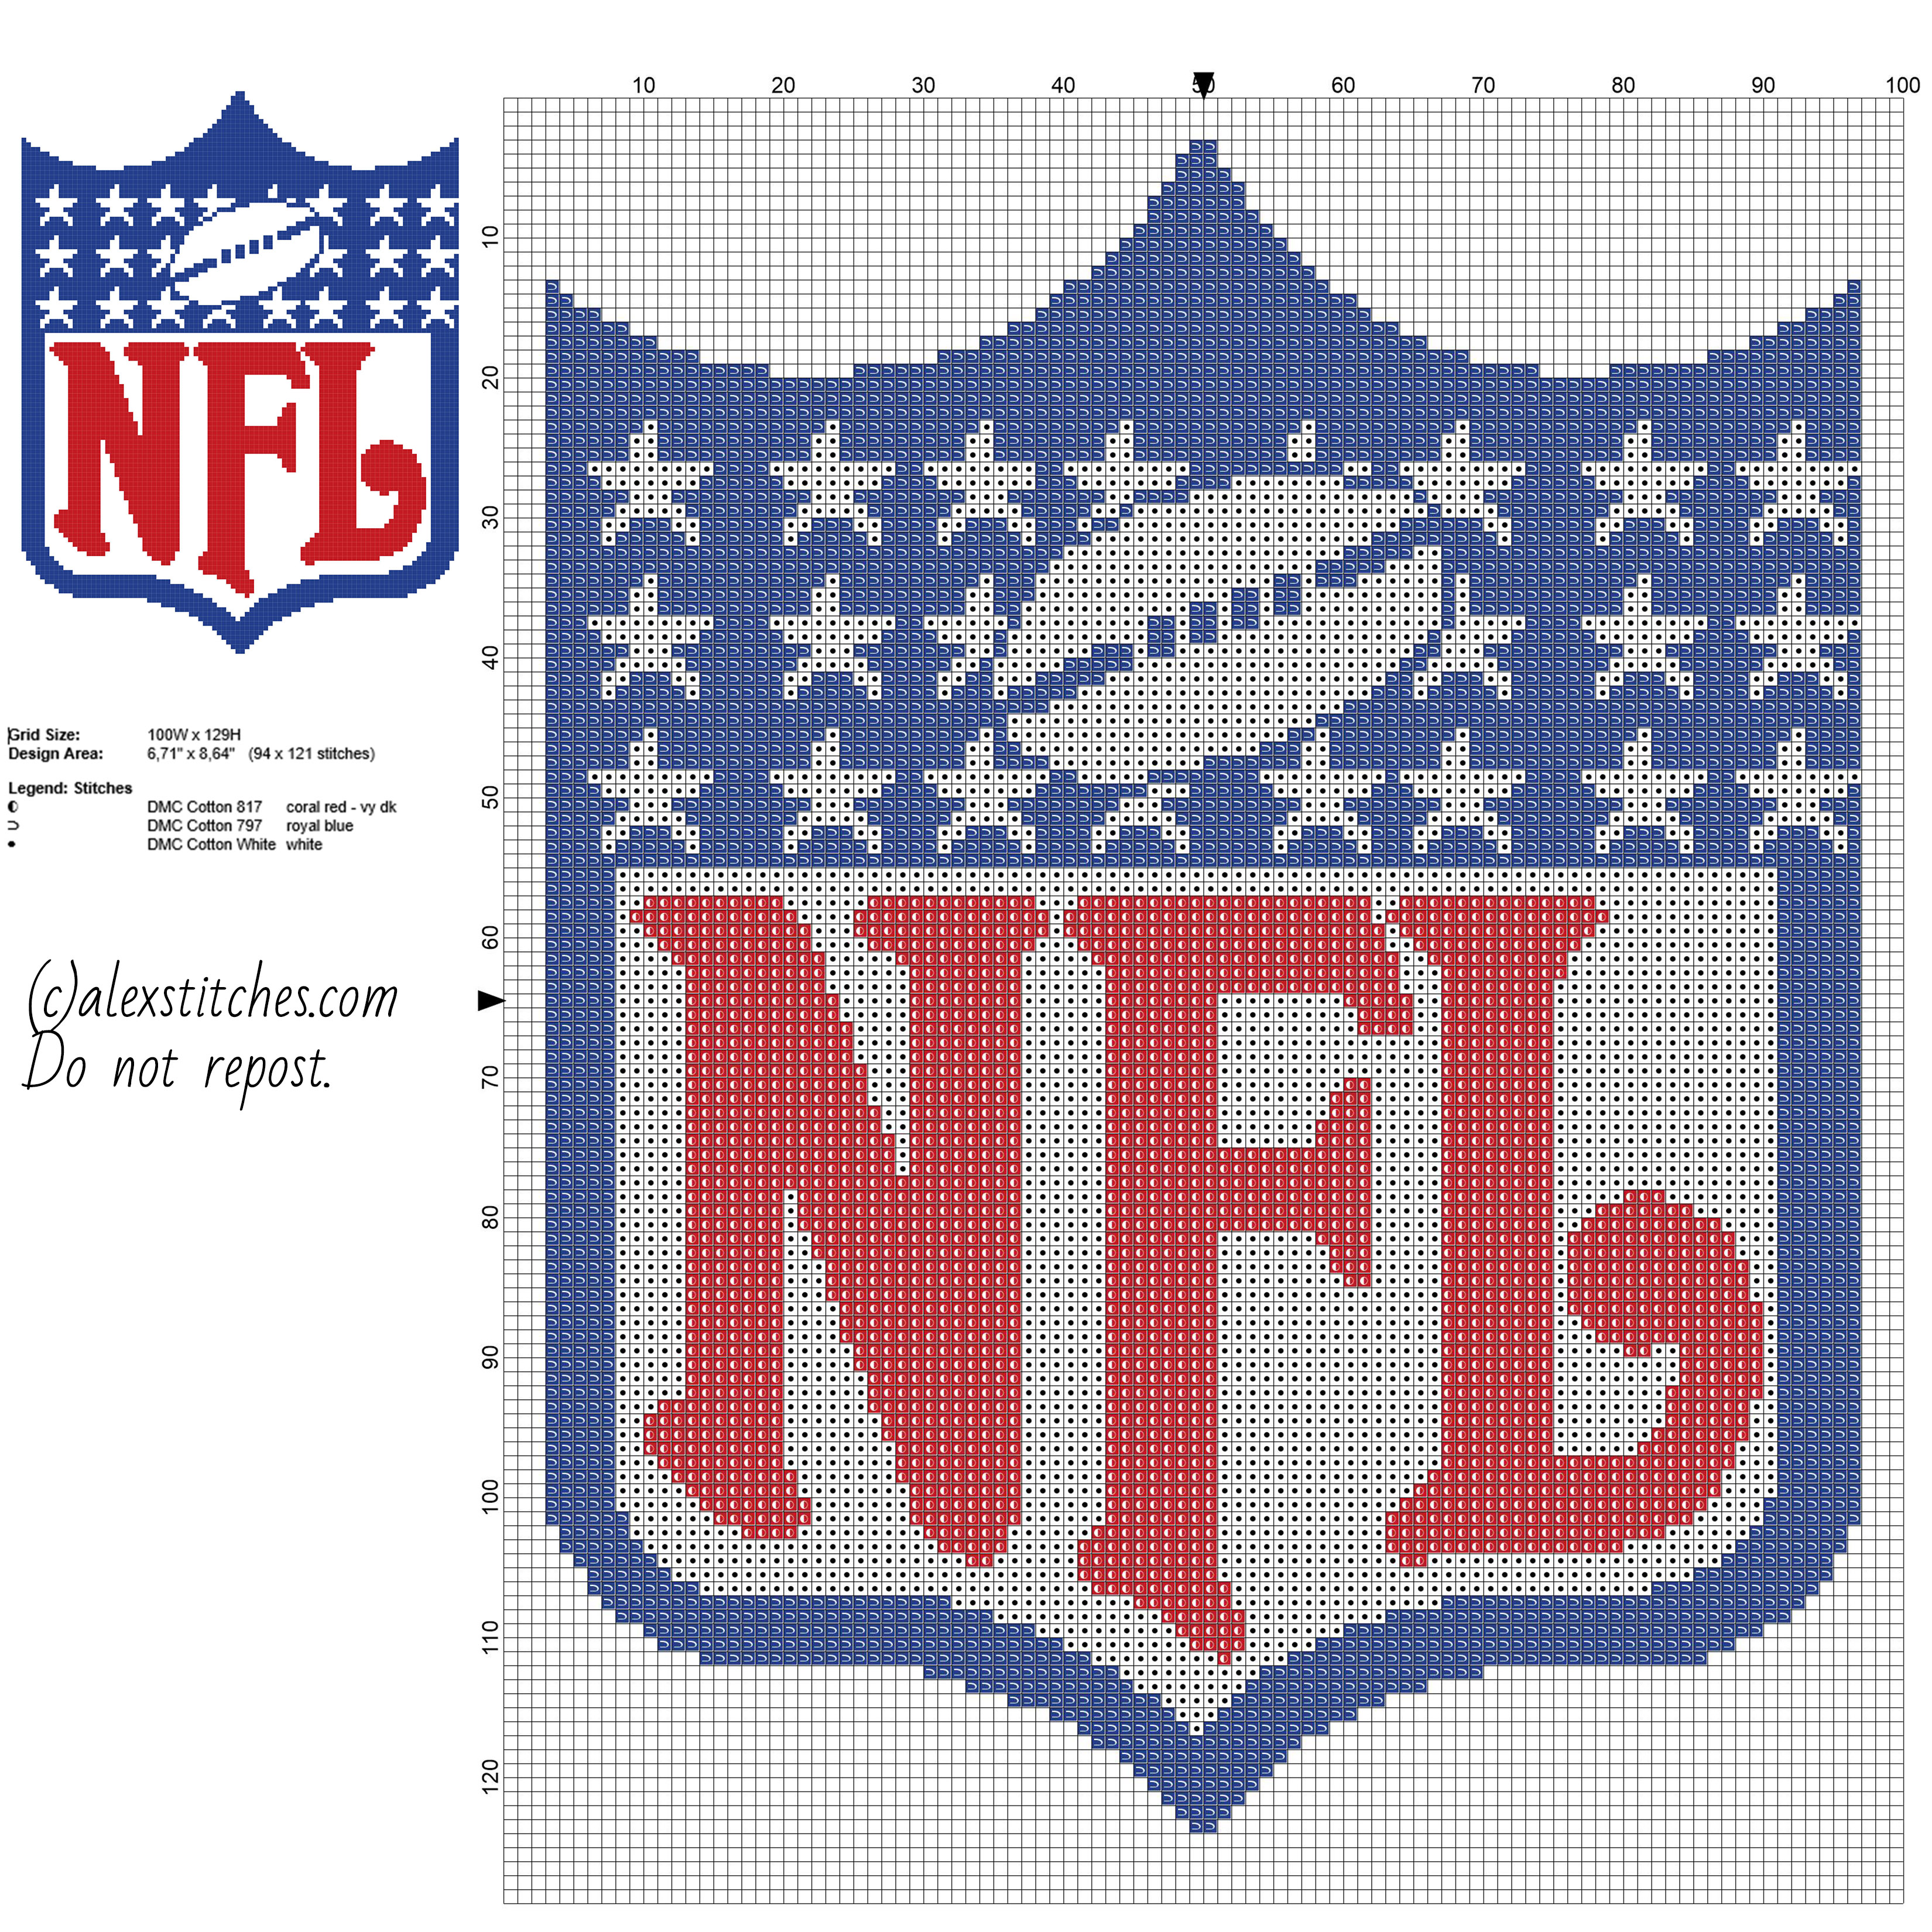 National Football League NFL logo free cross stitch pattern 94 x 121 stitches 3 DMC threads